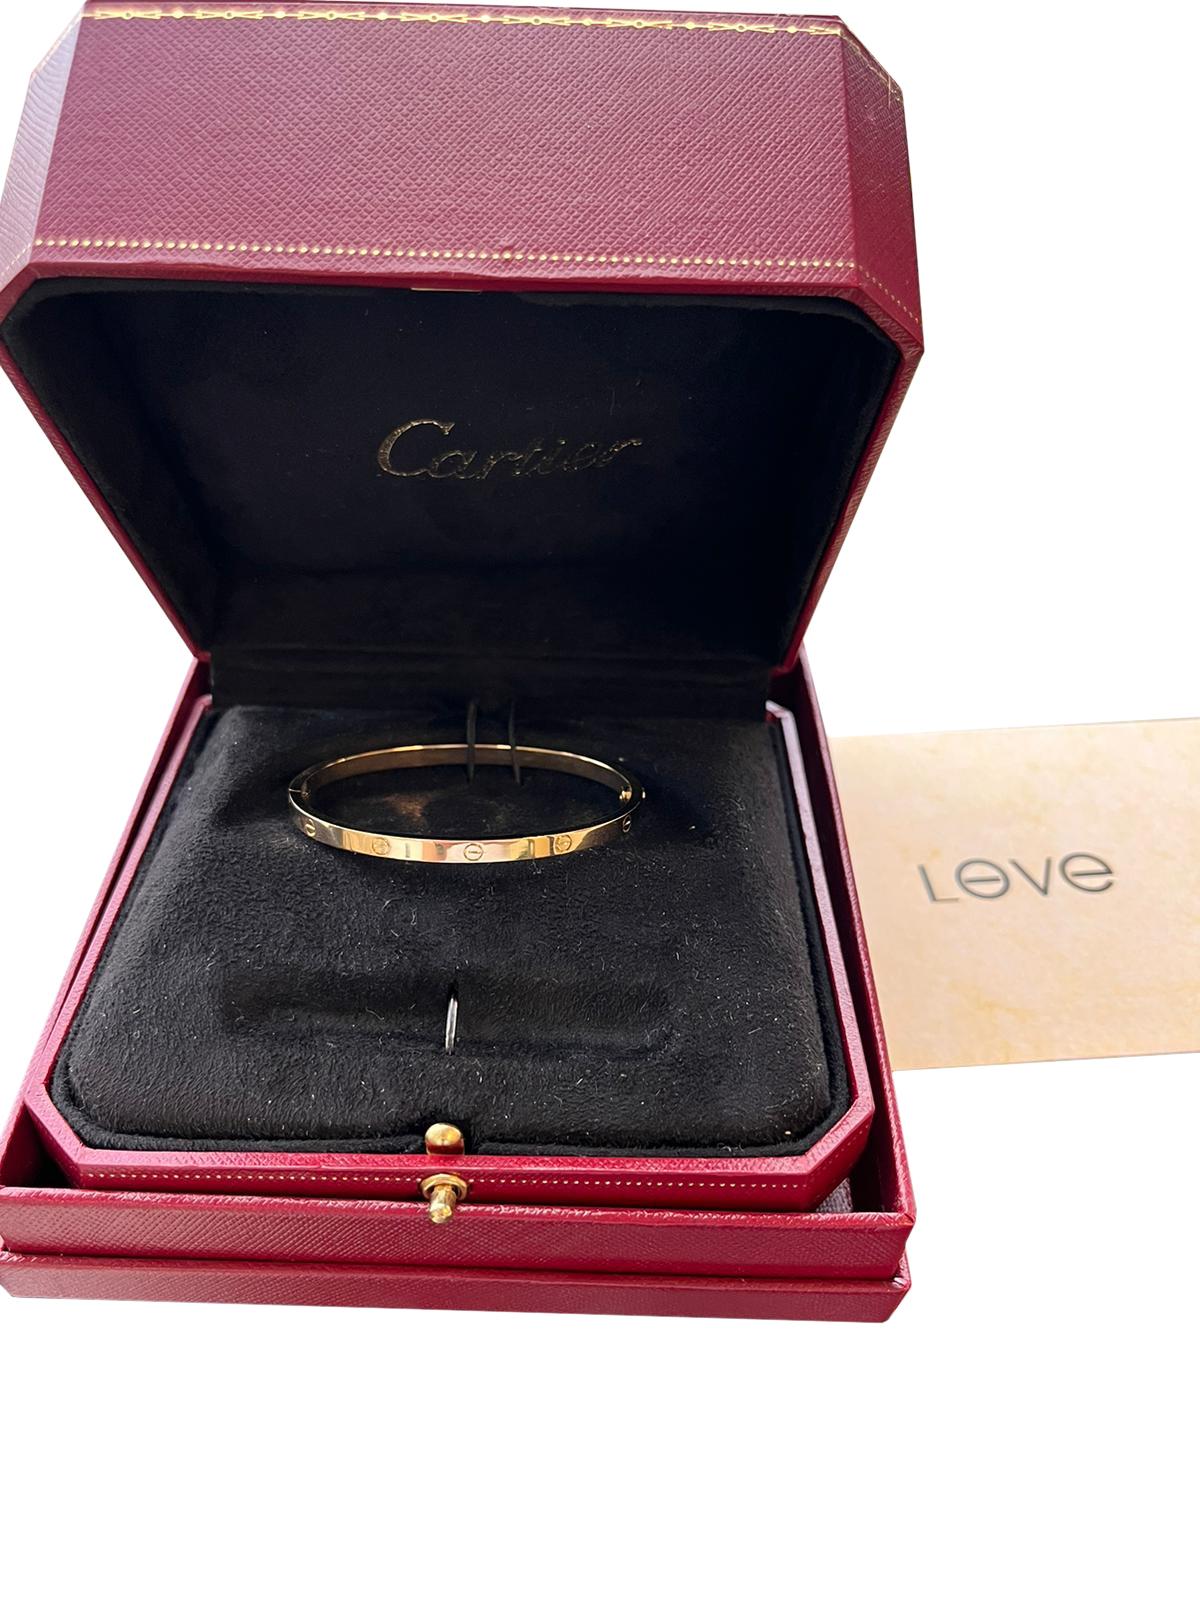 Cartier Love Bracelet 18K Yellow Gold Size 16 Small Model 2